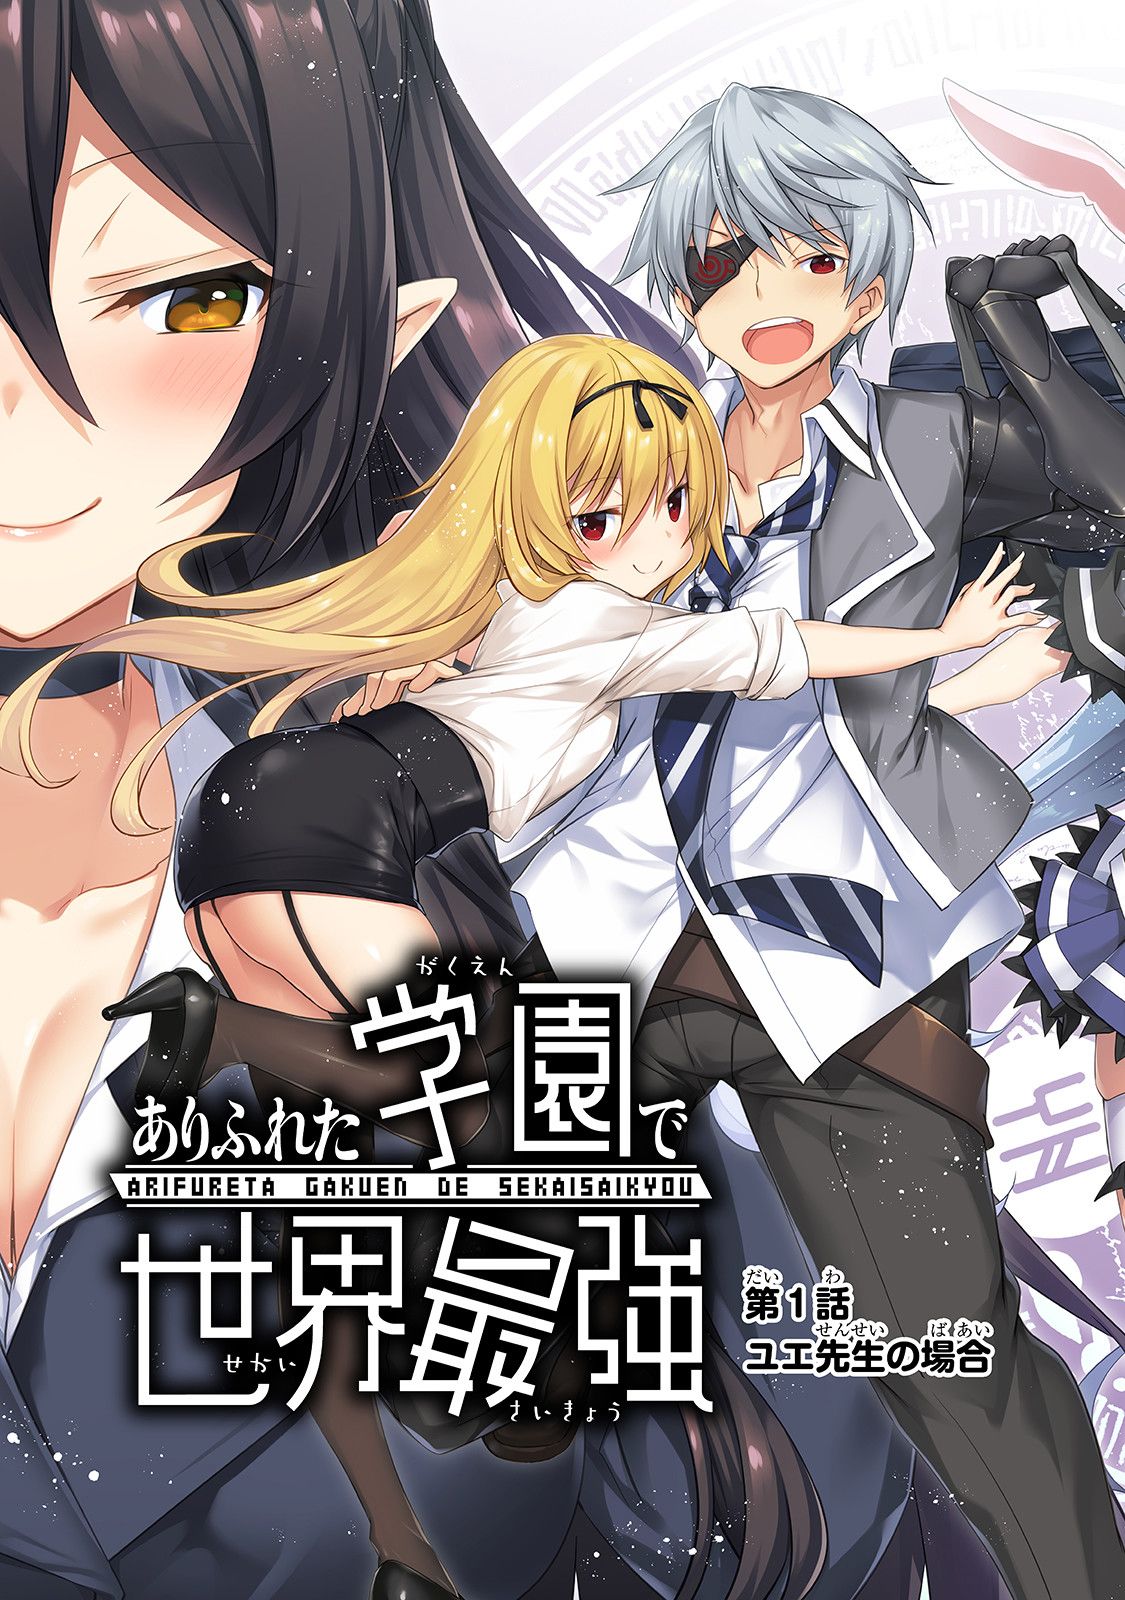 Launch of a Light Novel Line for Female Readers by Shueisha's Dash X Bunko Imprint